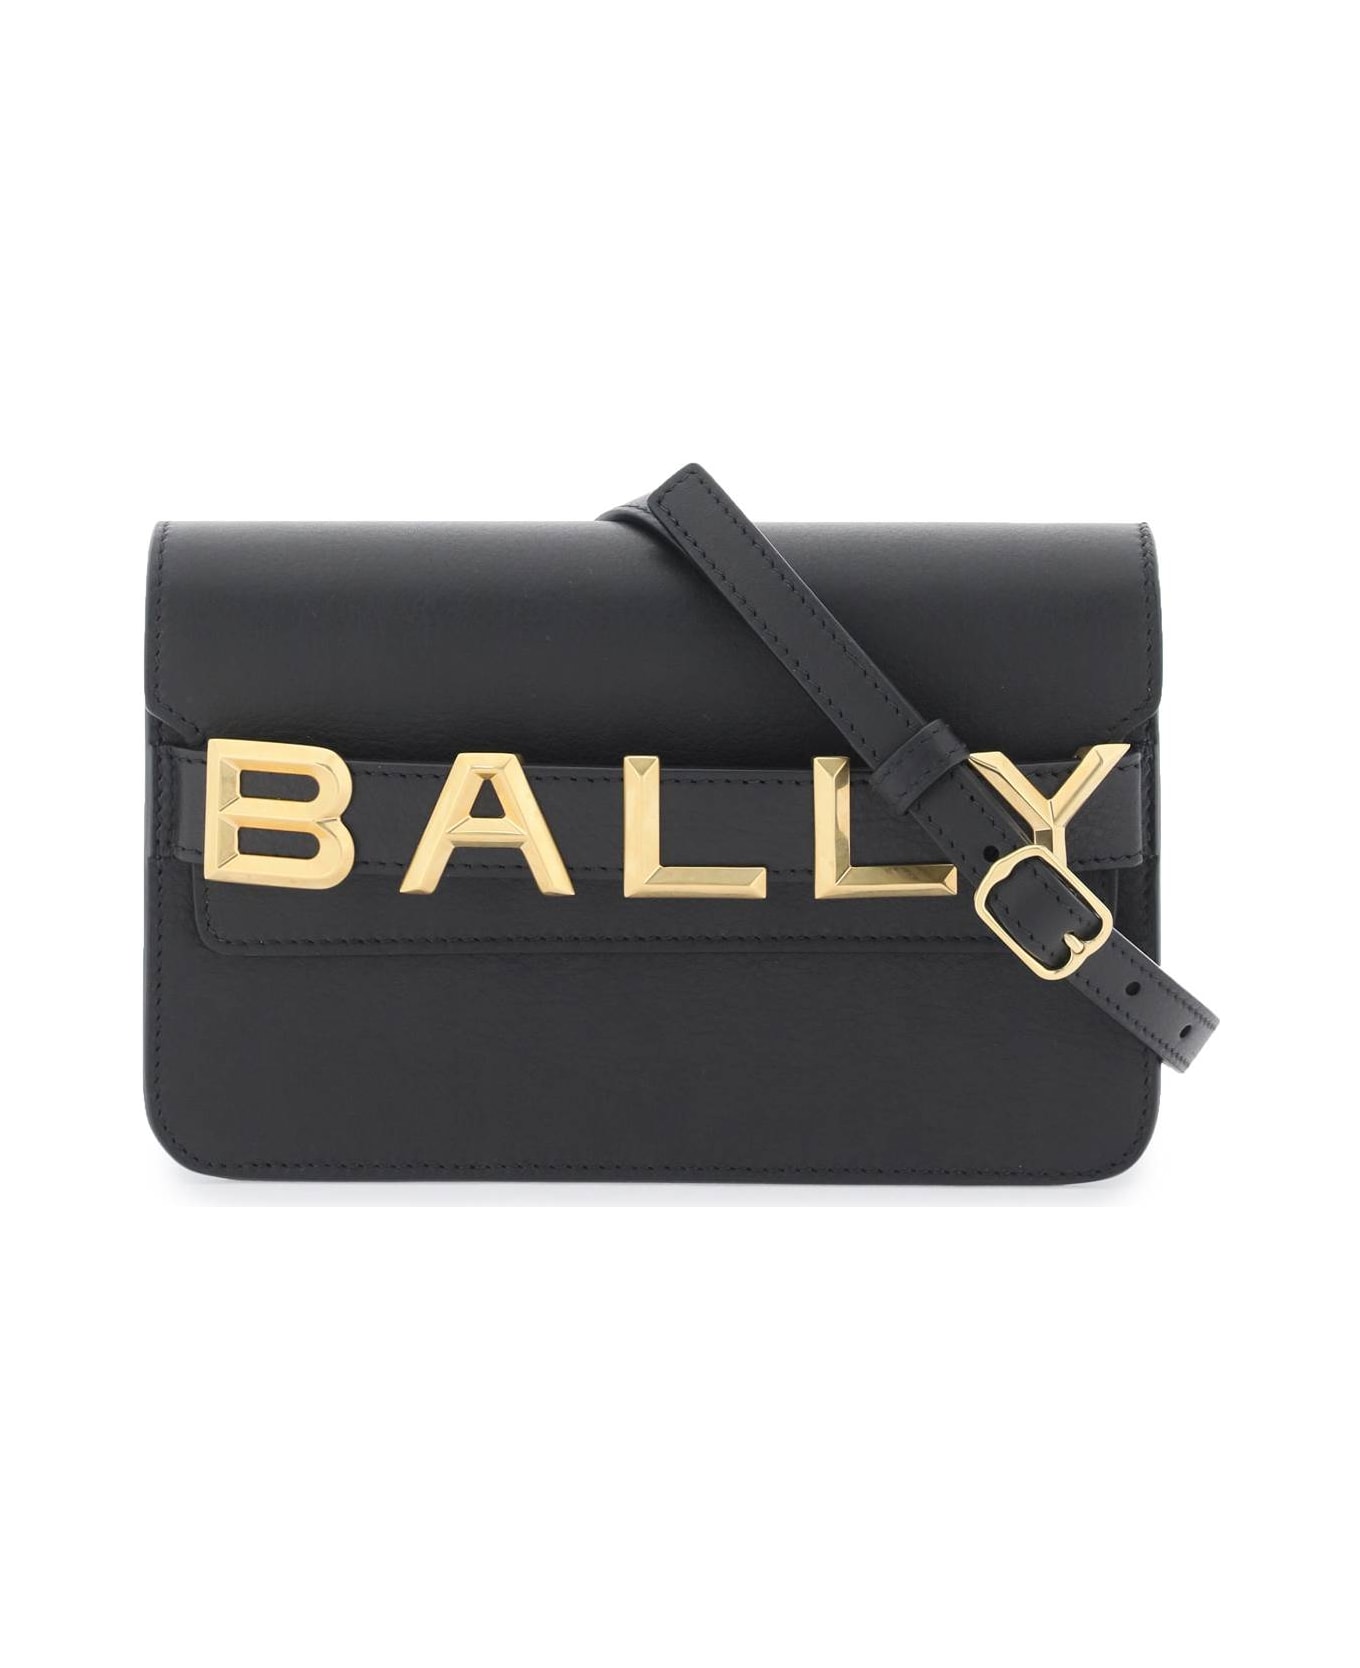 Bally Logo Crossbody Bag - BLACK ORO (Black)